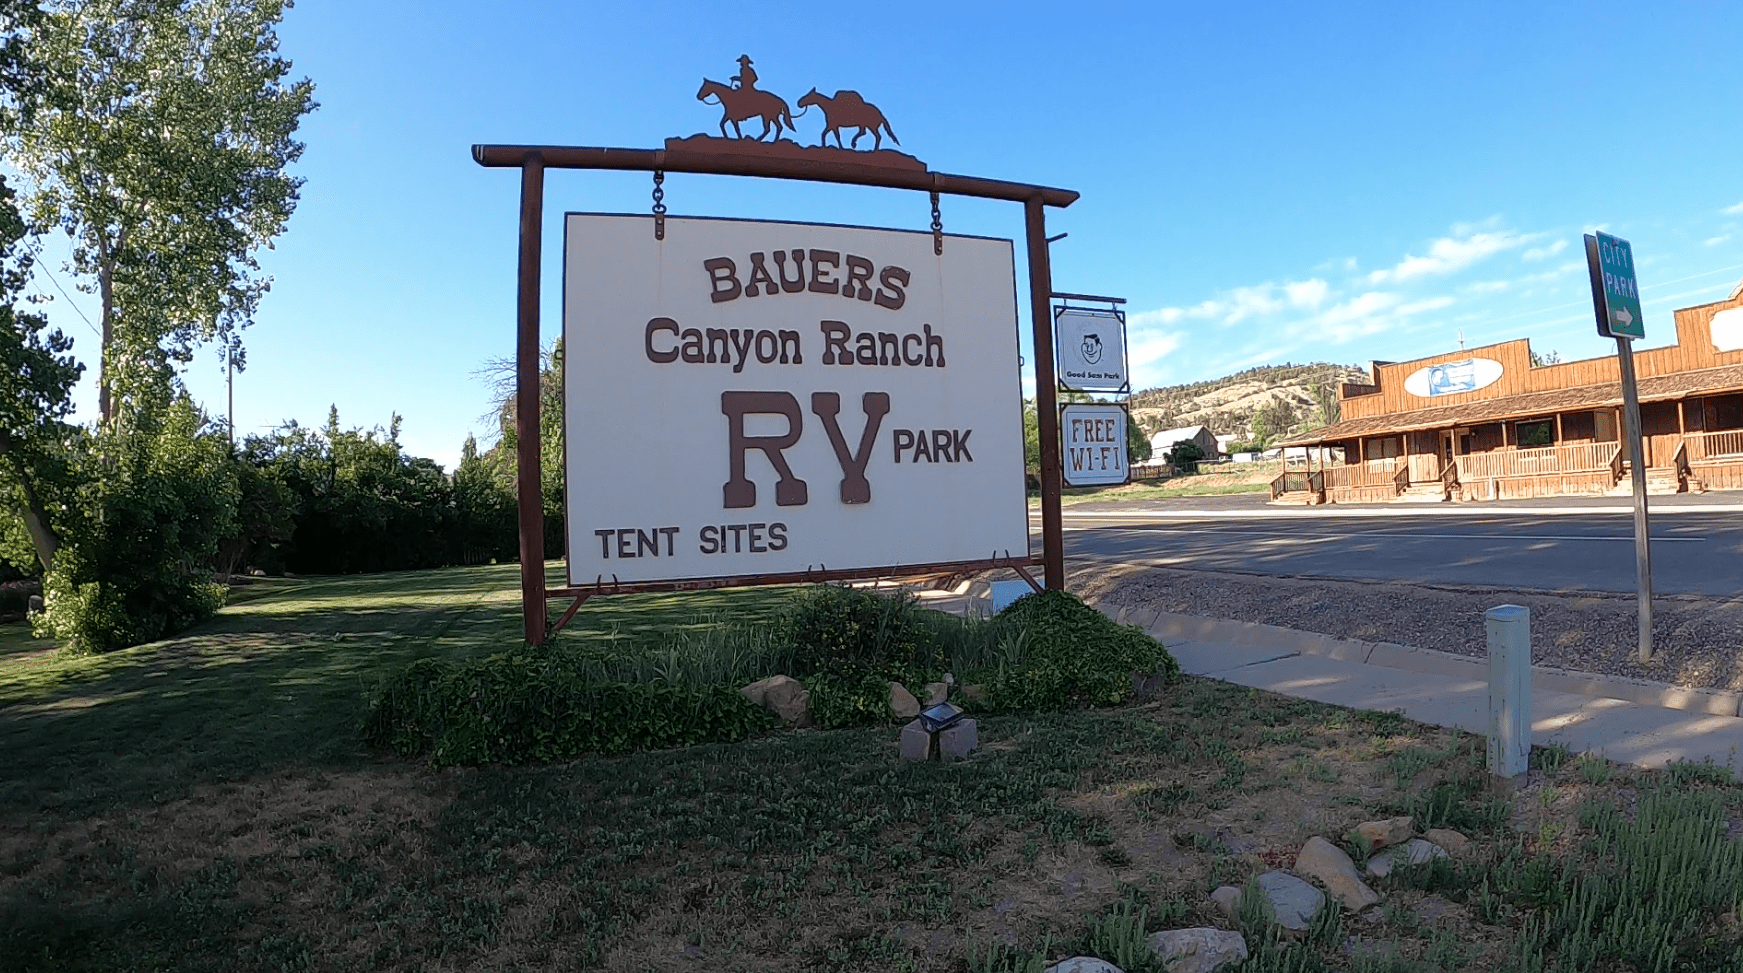 Bauers Canyon Ranch RV Park